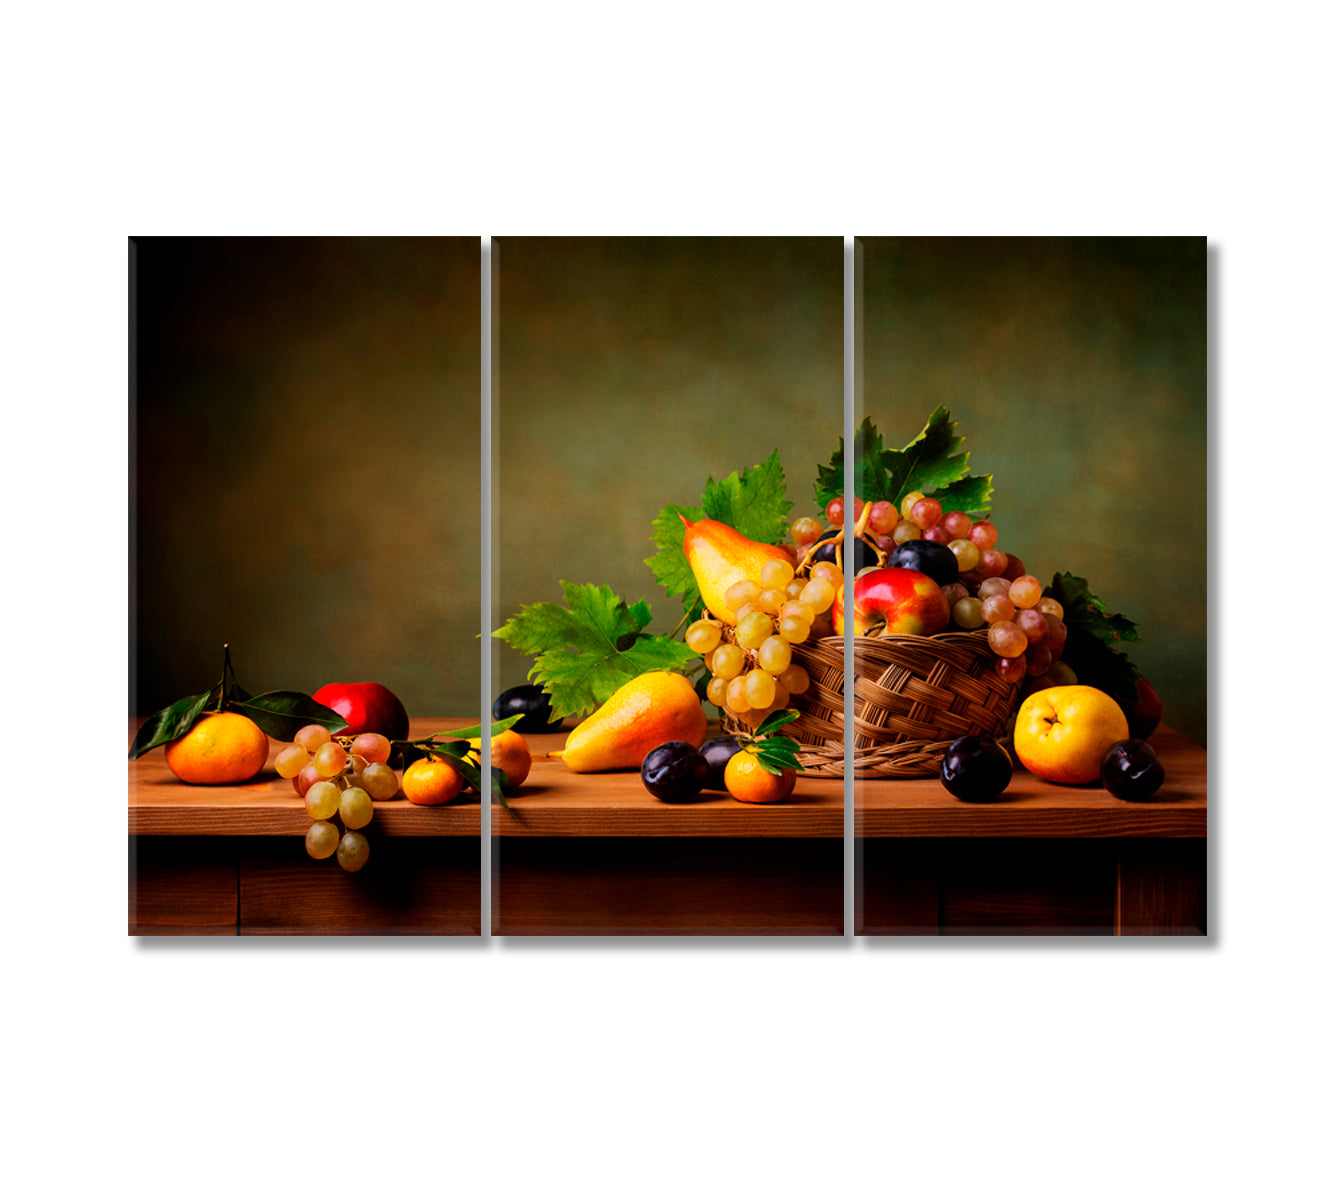 Still Life with Fruit Art Print-Canvas Print-CetArt-3 Panels-36x24 inches-CetArt